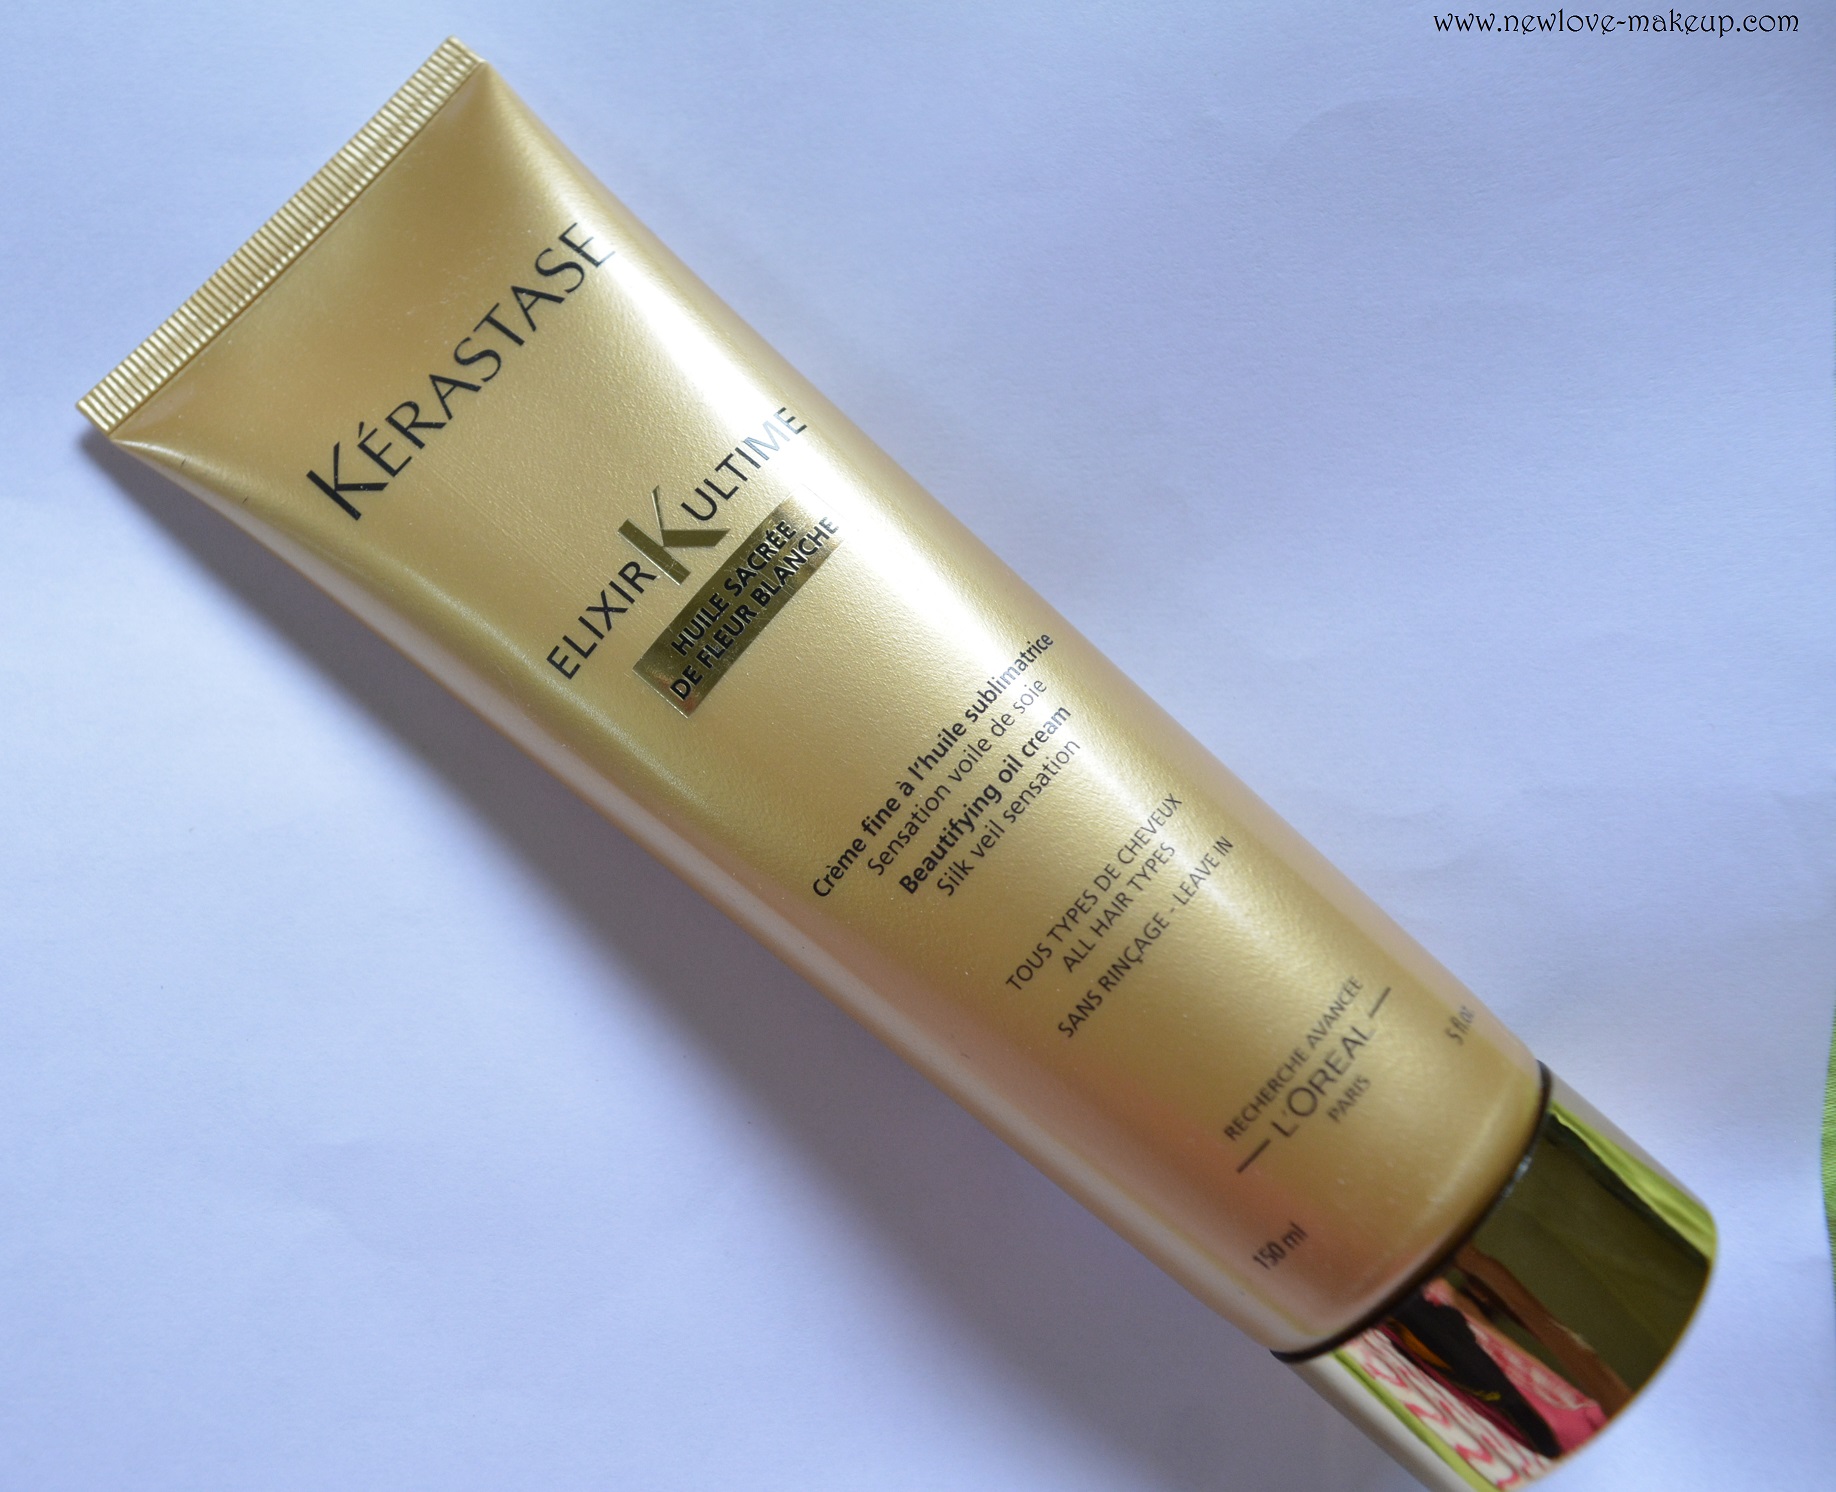 Kerastase Elixir Beautifying Cream Review - New - Makeup